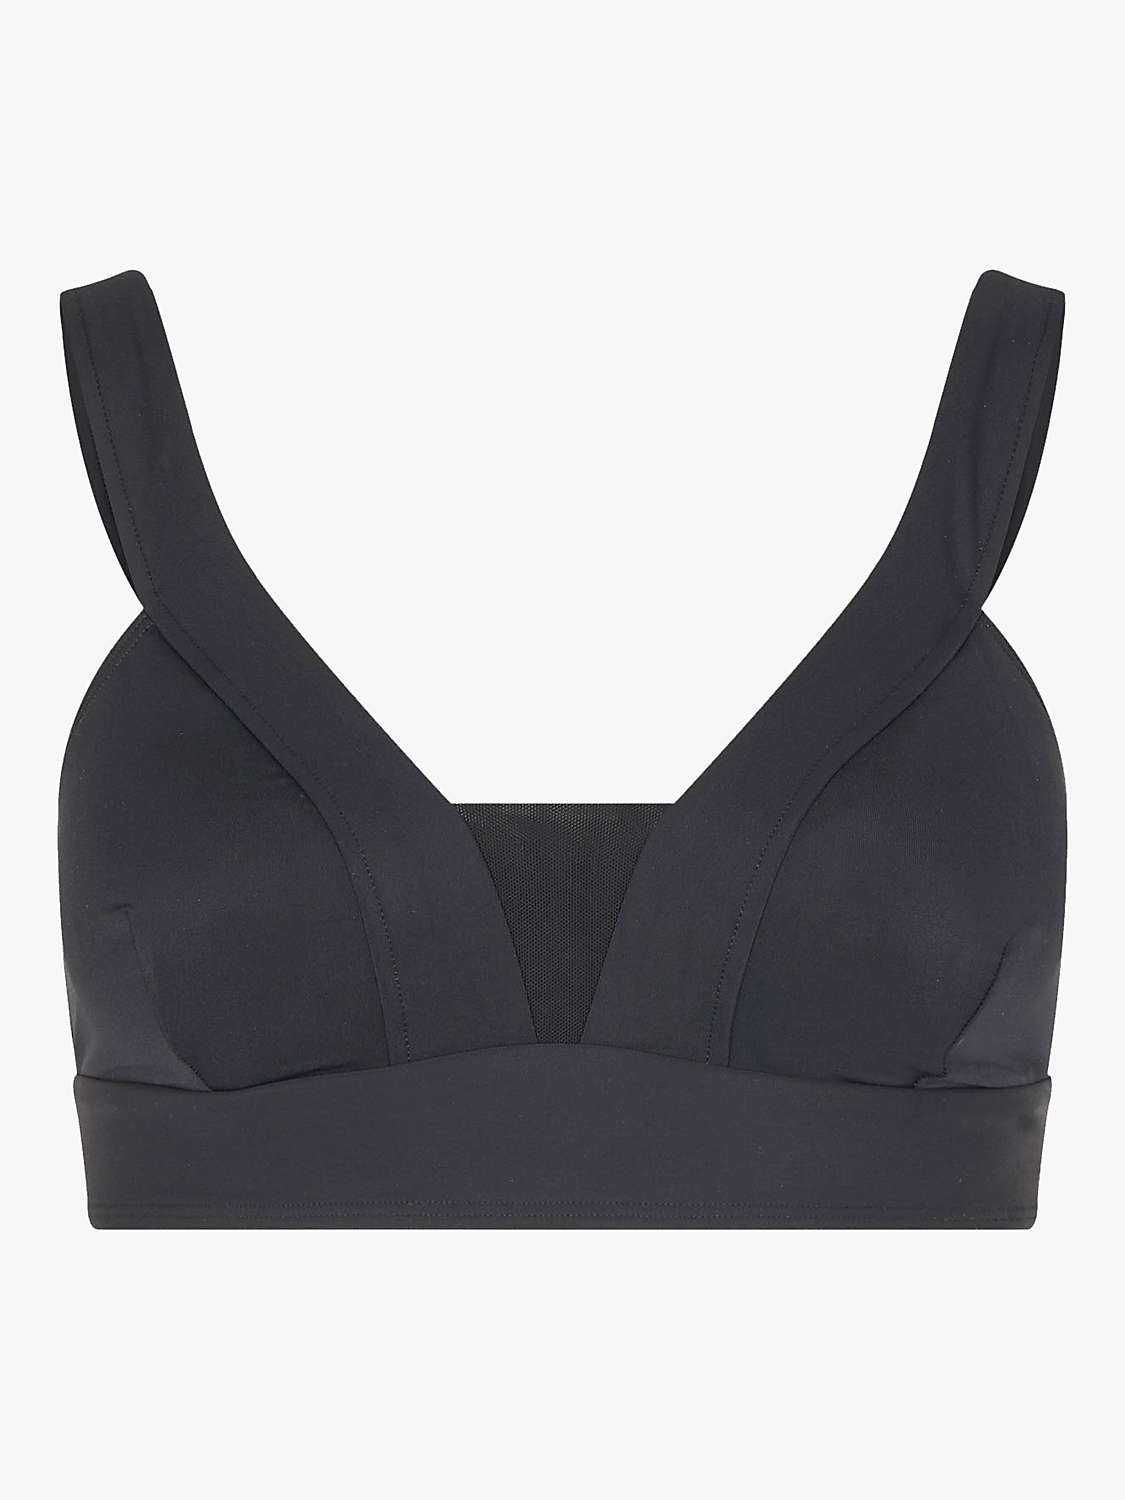 Buy Accessorize Lexi Bikini Top, Black Online at johnlewis.com